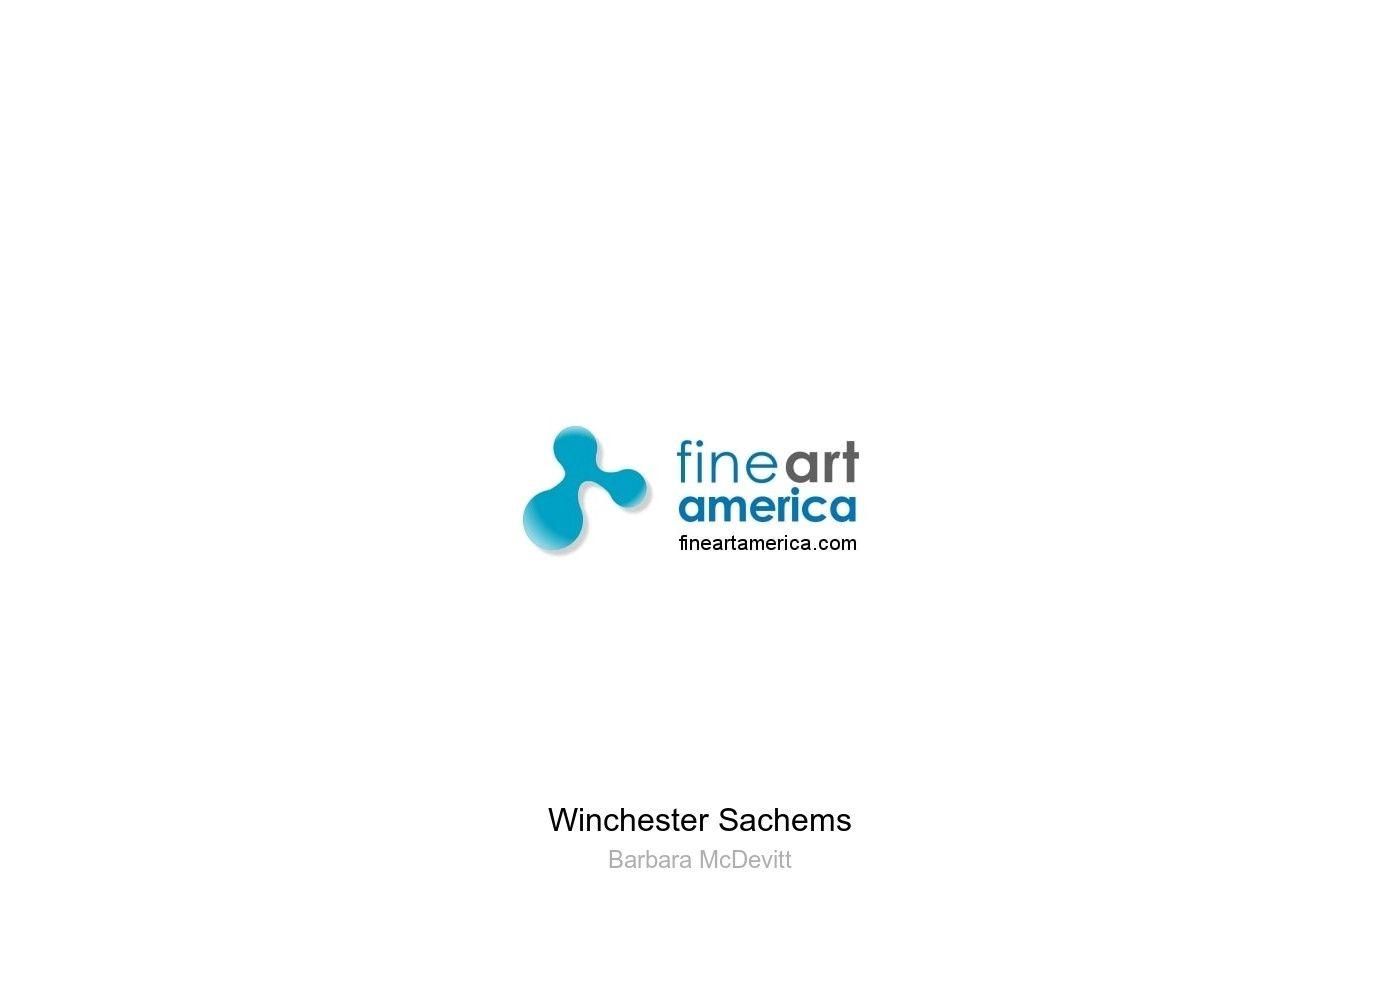 Winchester Sachems Logo - Winchester Sachems Greeting Card for Sale by Barbara McDevitt